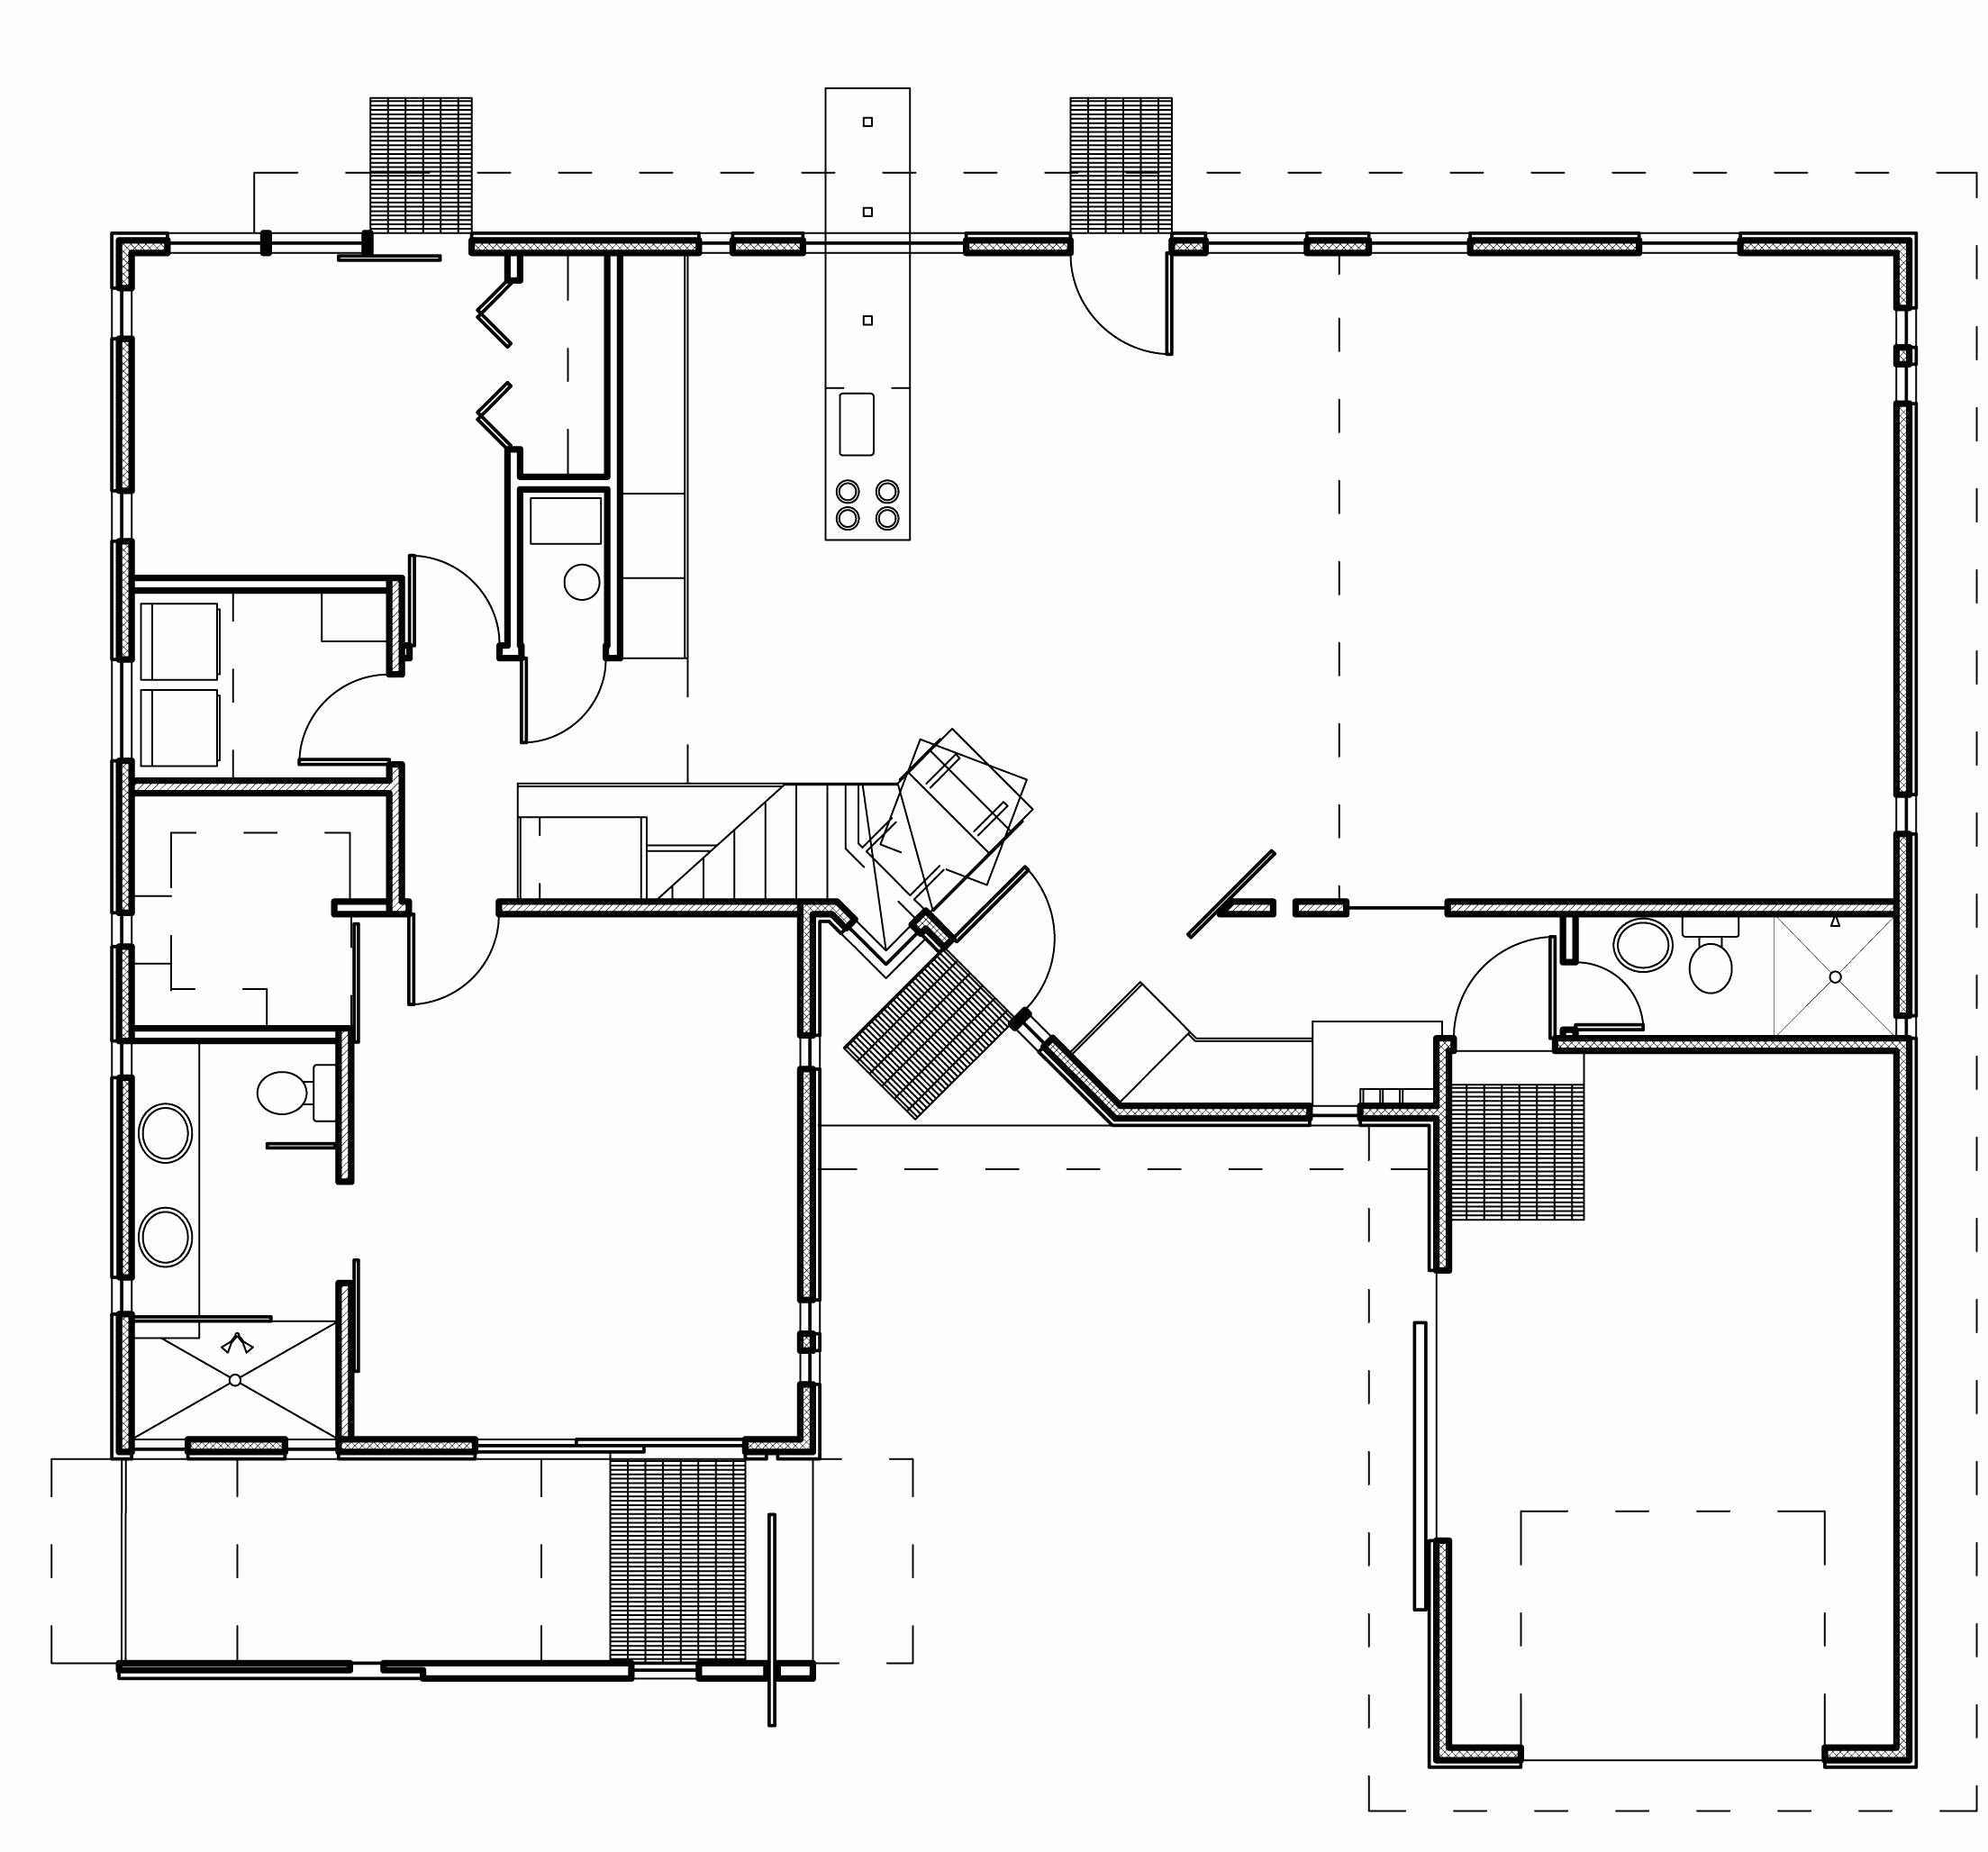 modern house designs and floor plans inspirational small home fice floor plans inspirational design plan 0d